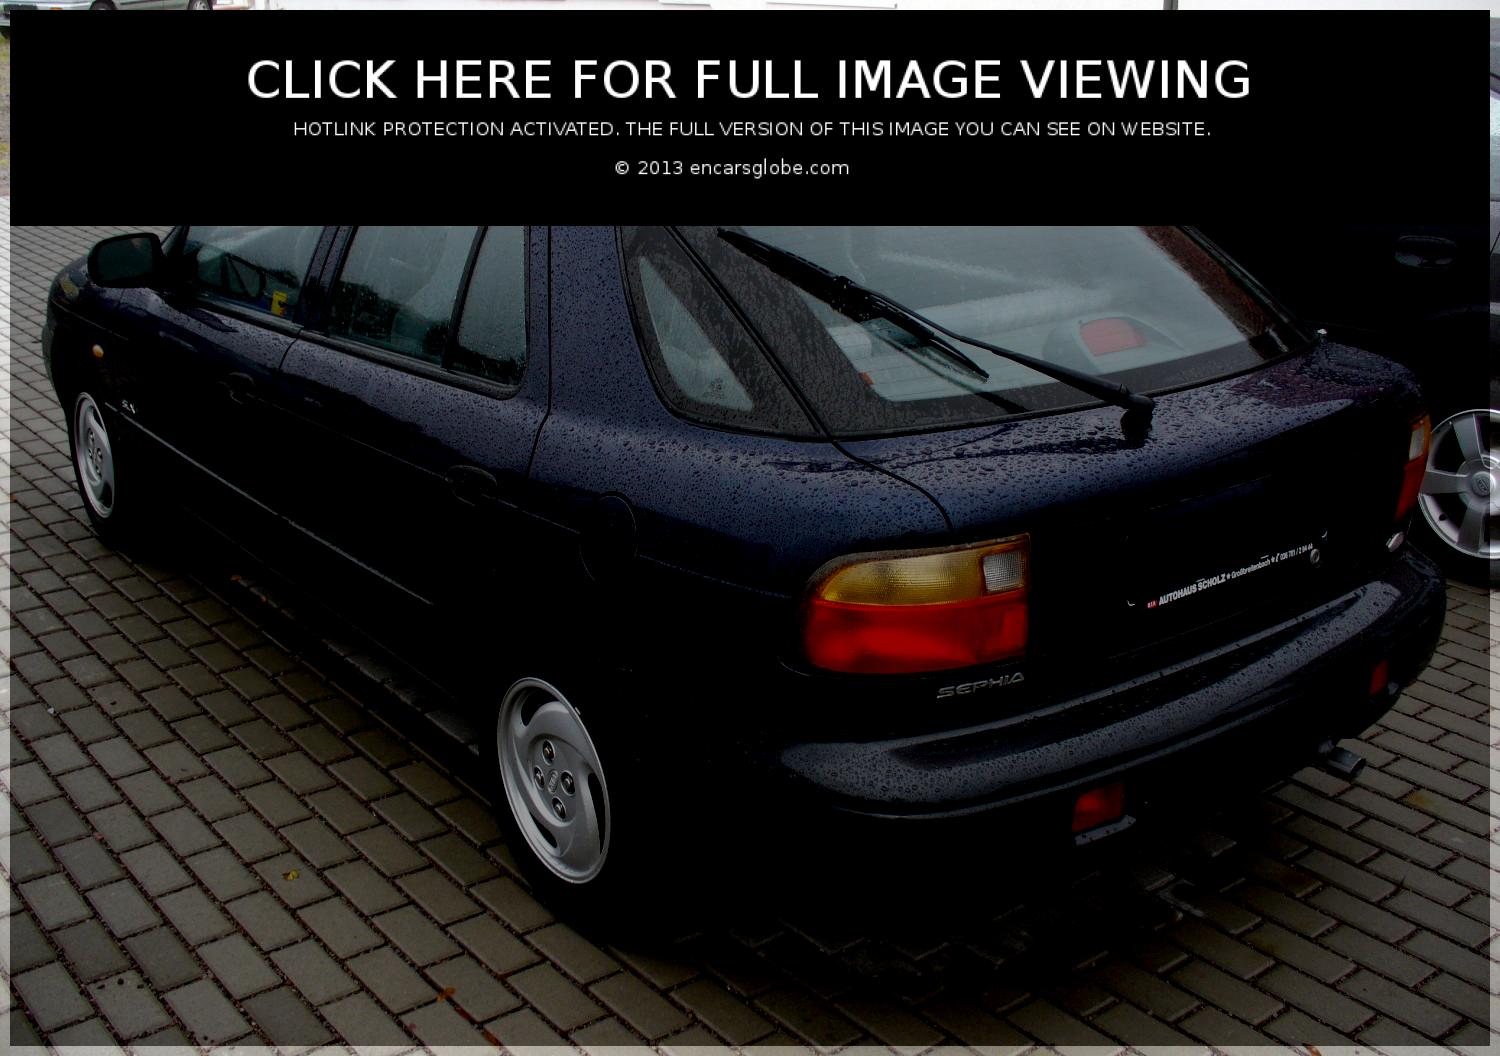 Kia Sephia SLX 15: Photo gallery, complete information about model ...